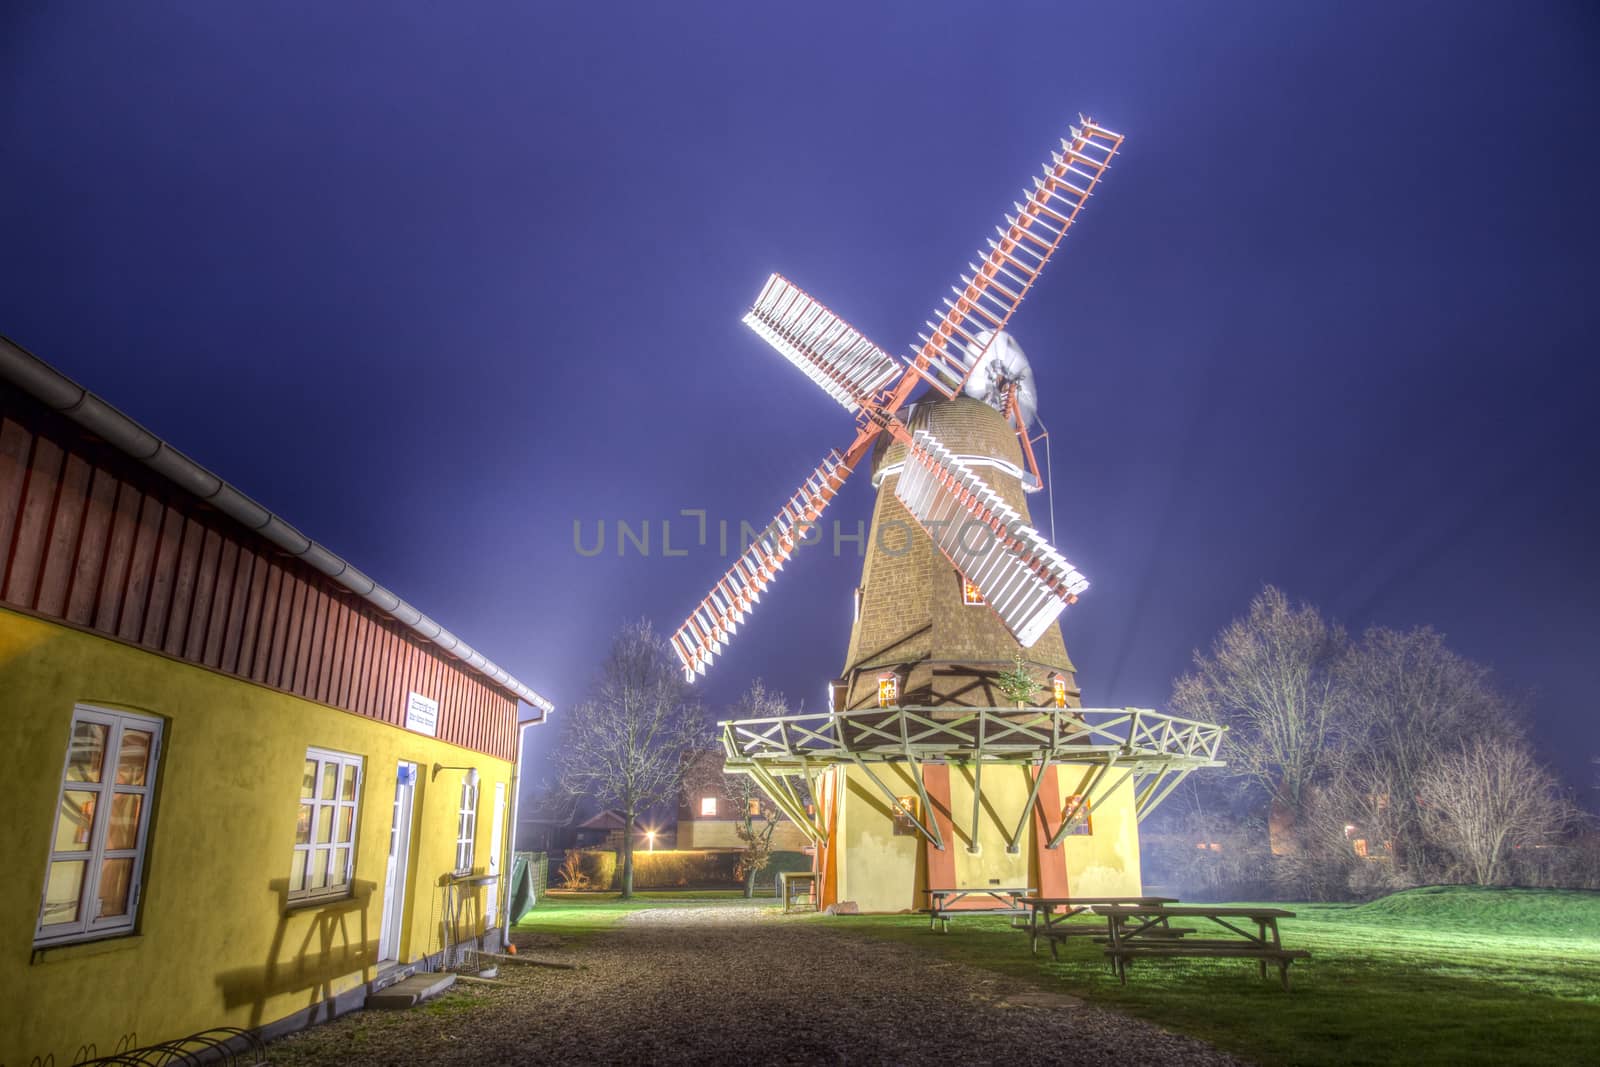 Historic Danish Windmill HDR by oliverfoerstner